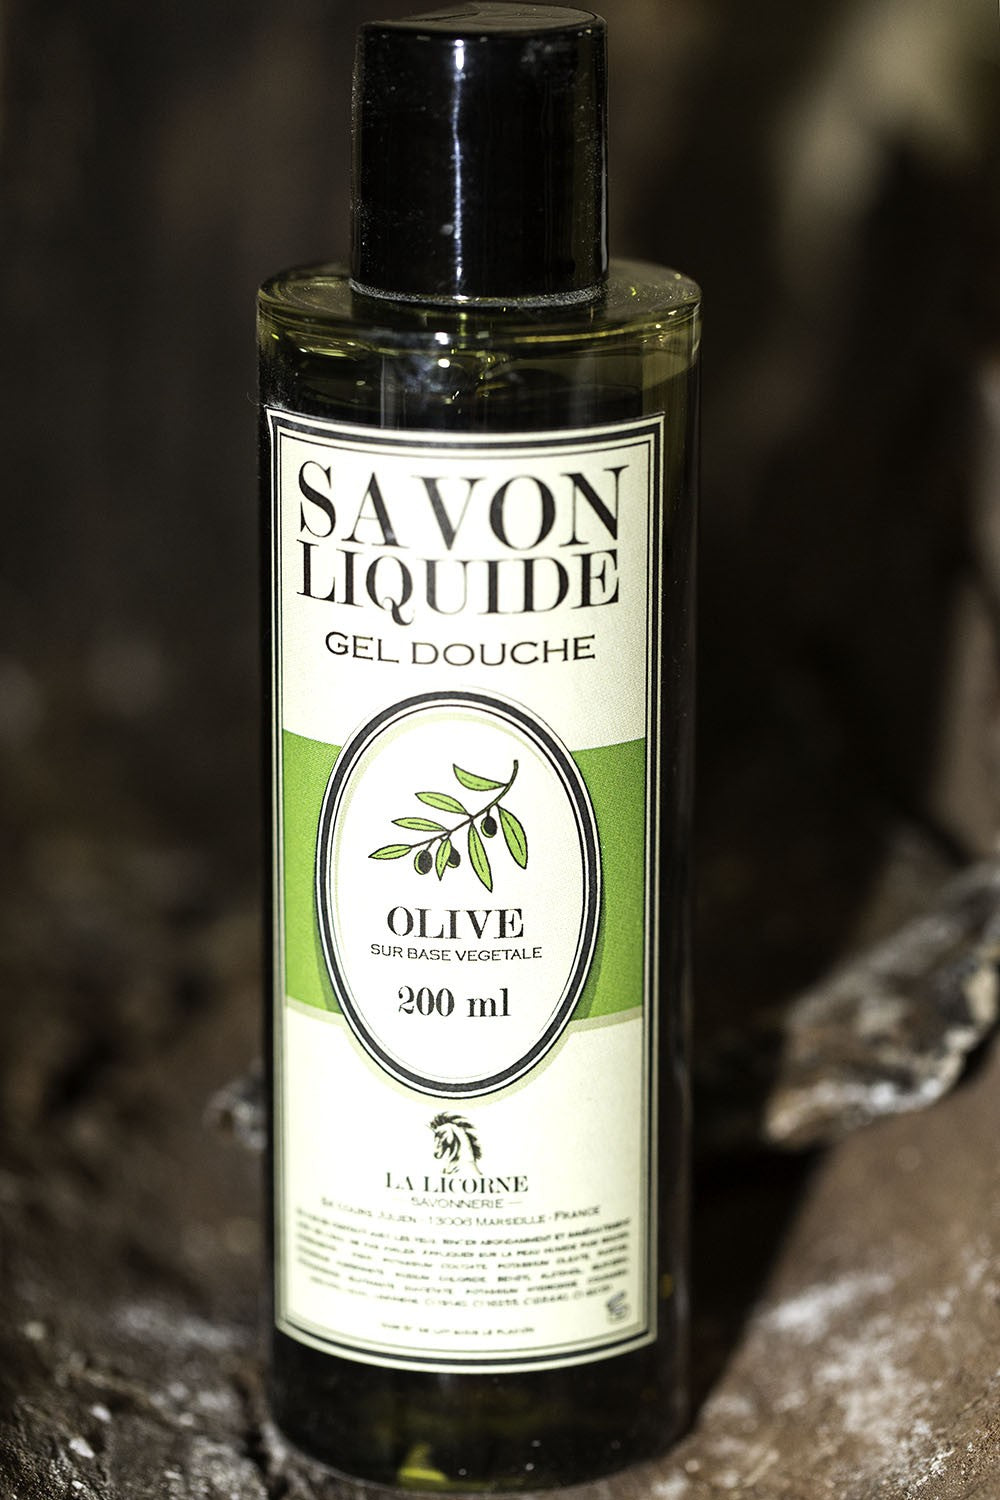 Liquid soap/shower gel - 200ml Olive